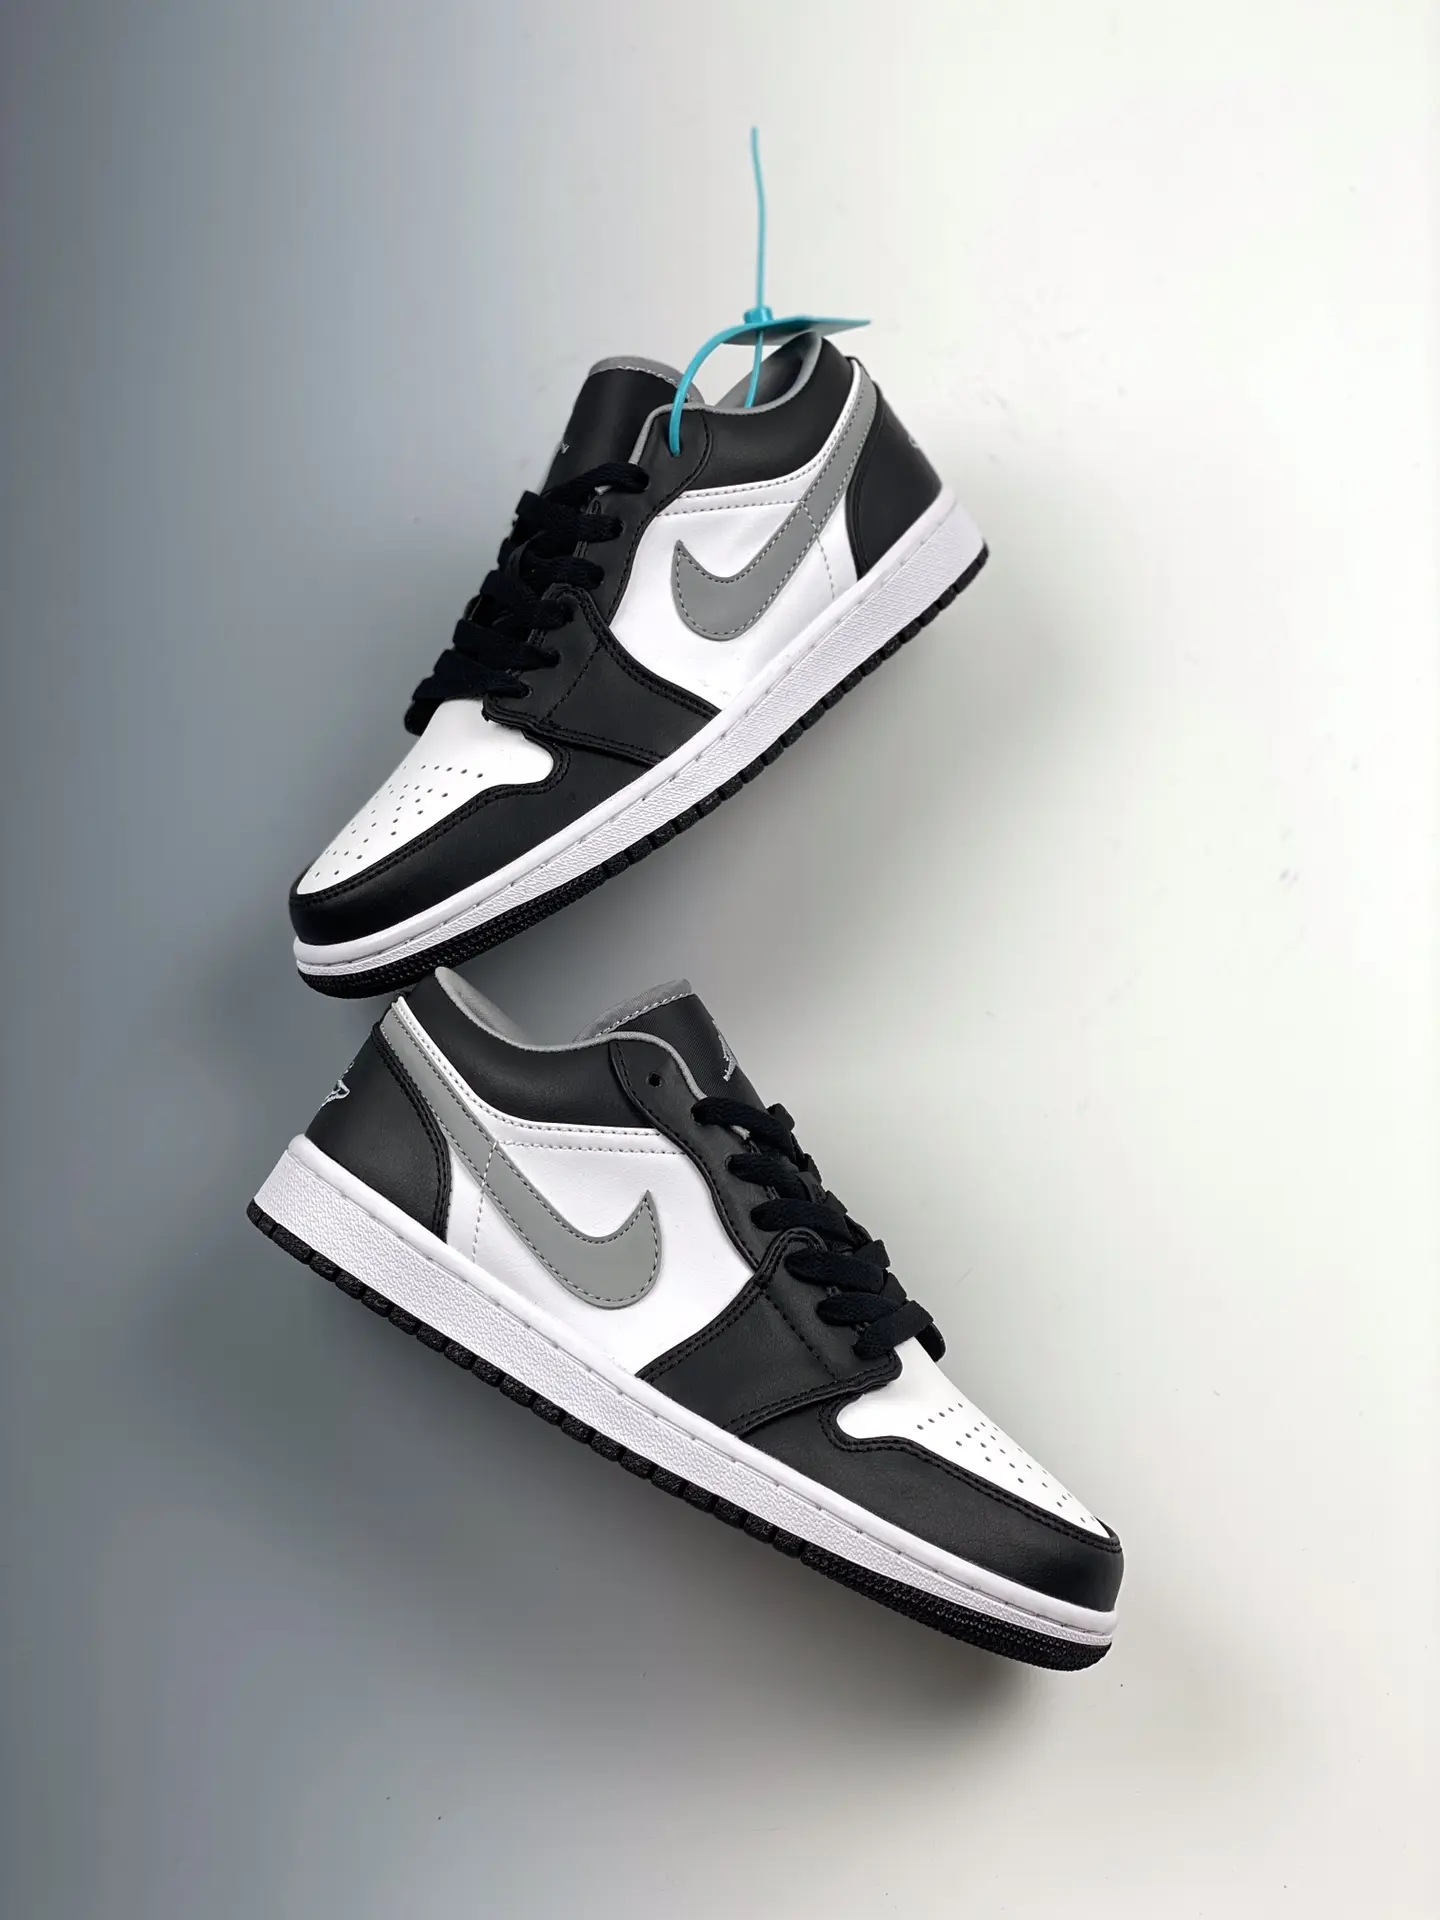 Nike Men's Air Jordan 1 Low Black/Particle Grey Shoes Review | YtaYta